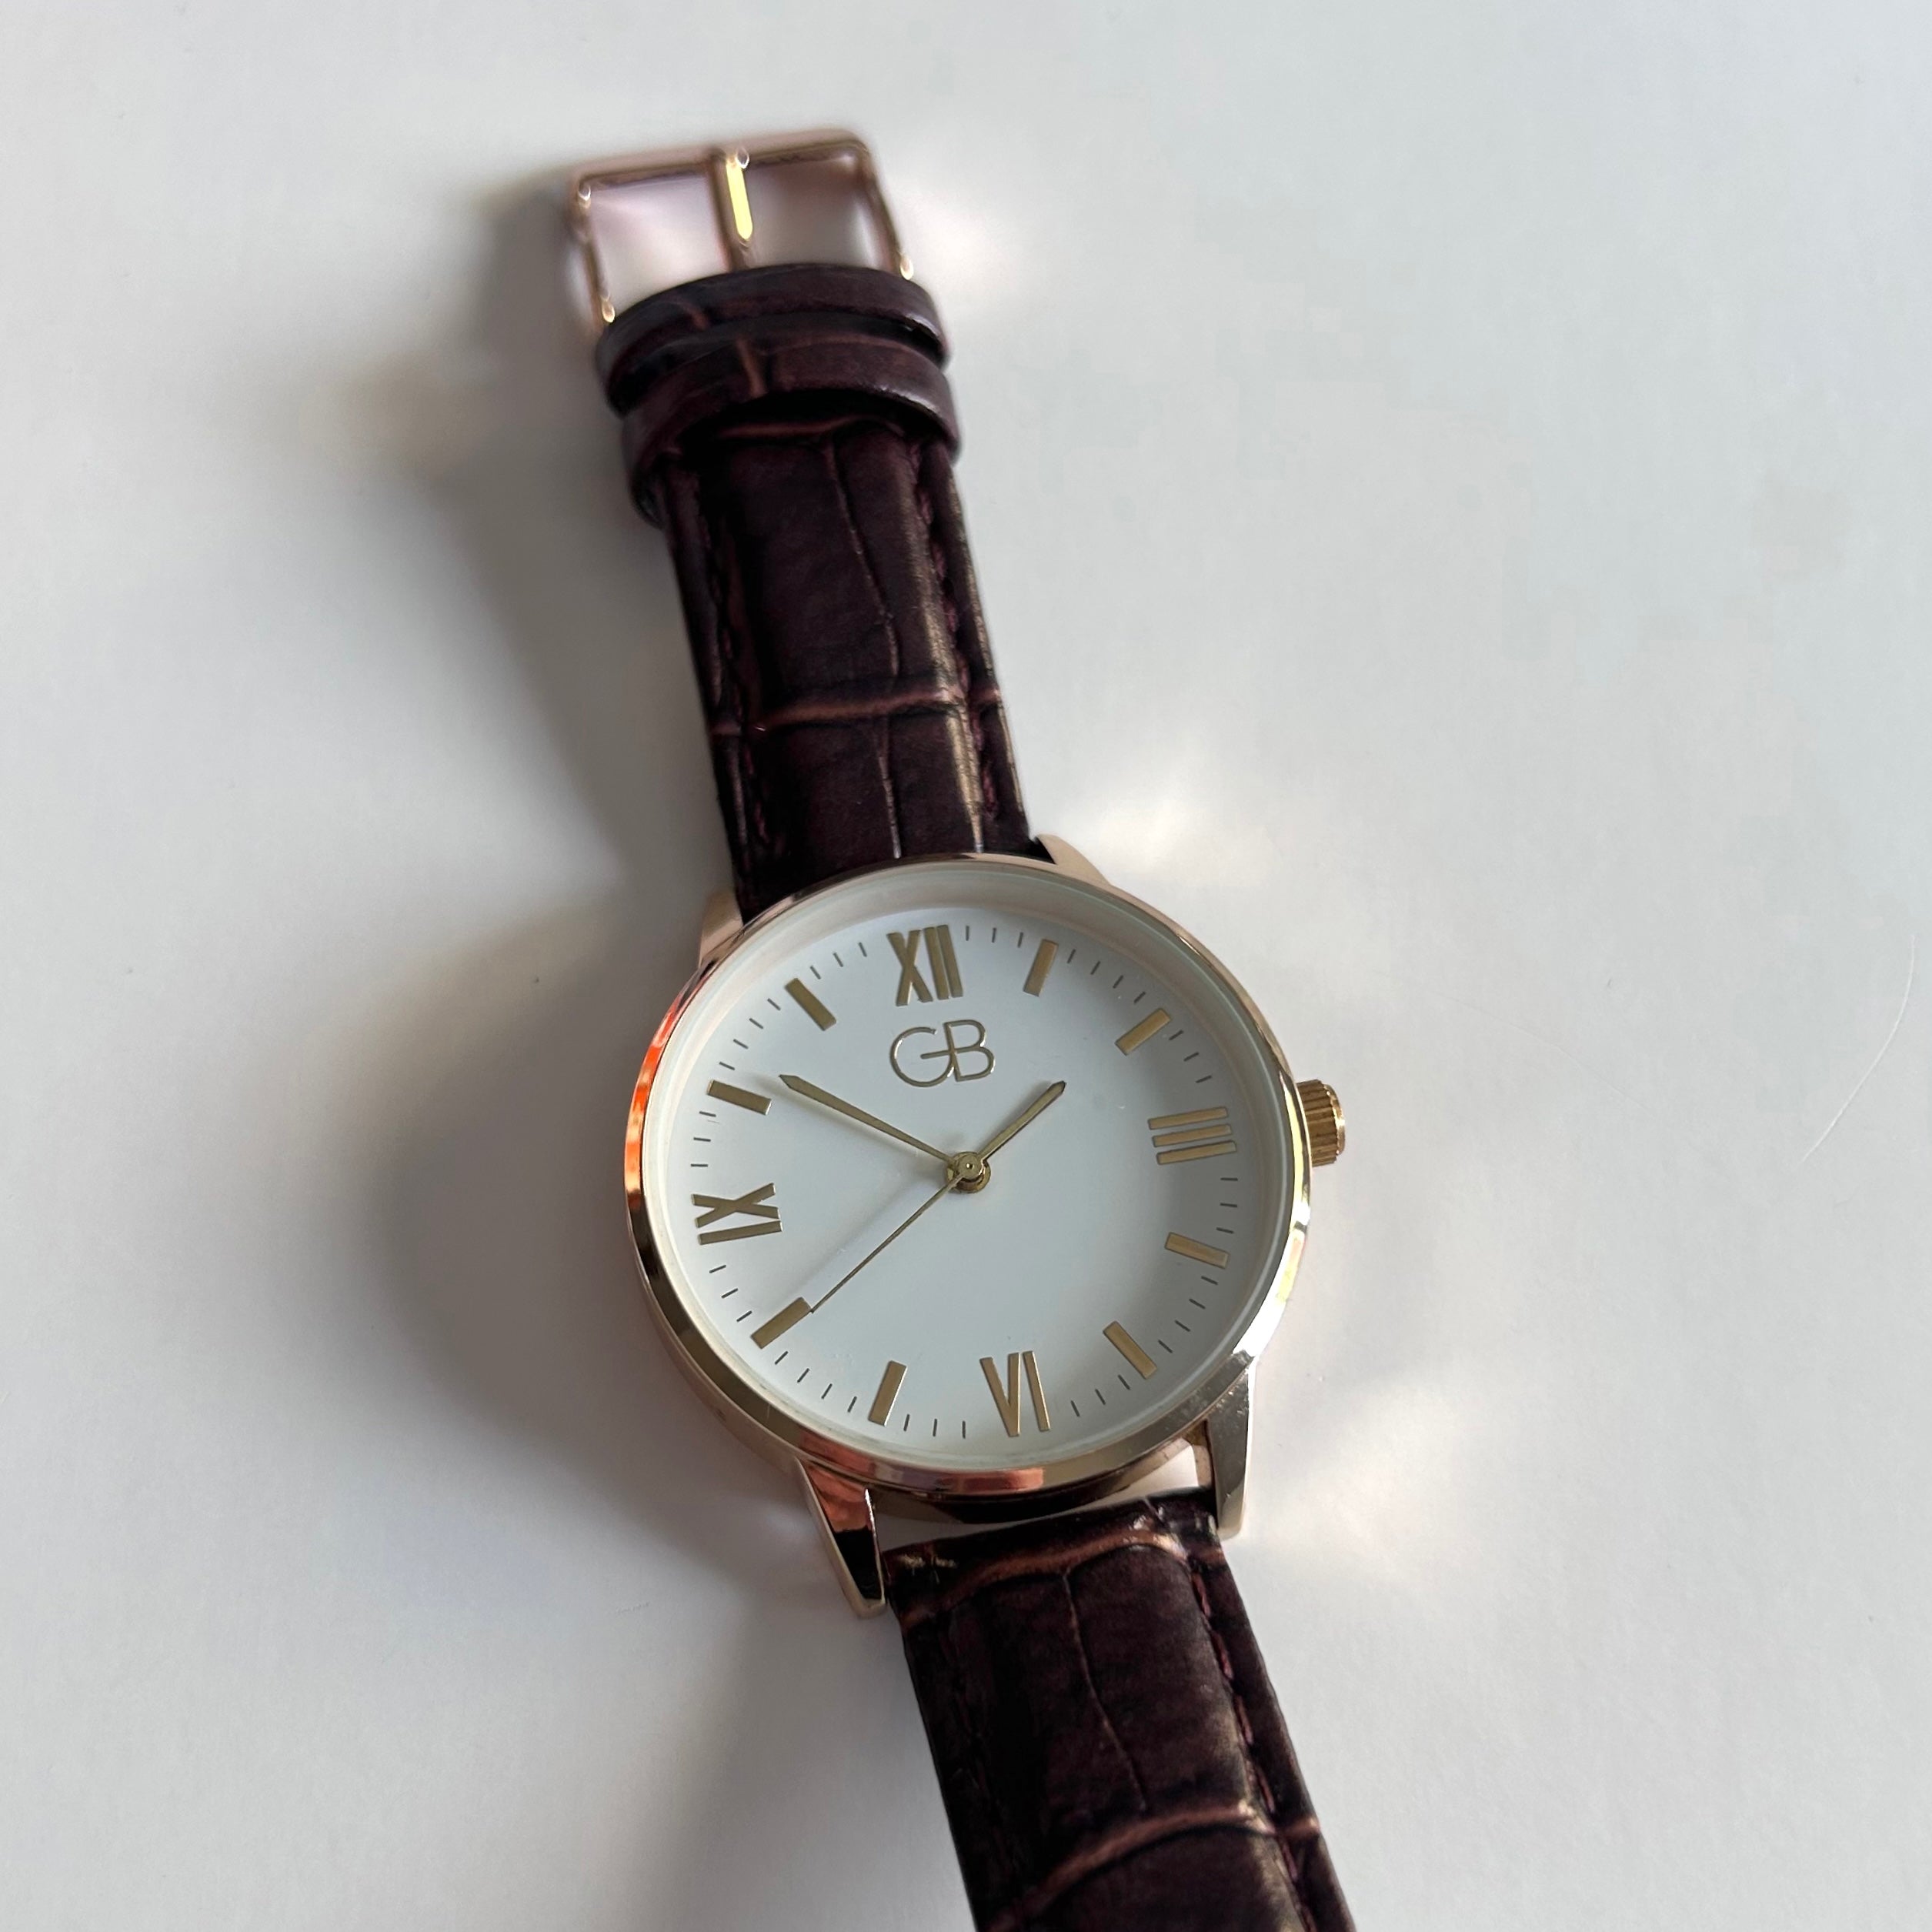 Giani Bernard Shield Analog White Dial Men's Watch - GB-103B : Amazon.in:  Fashion